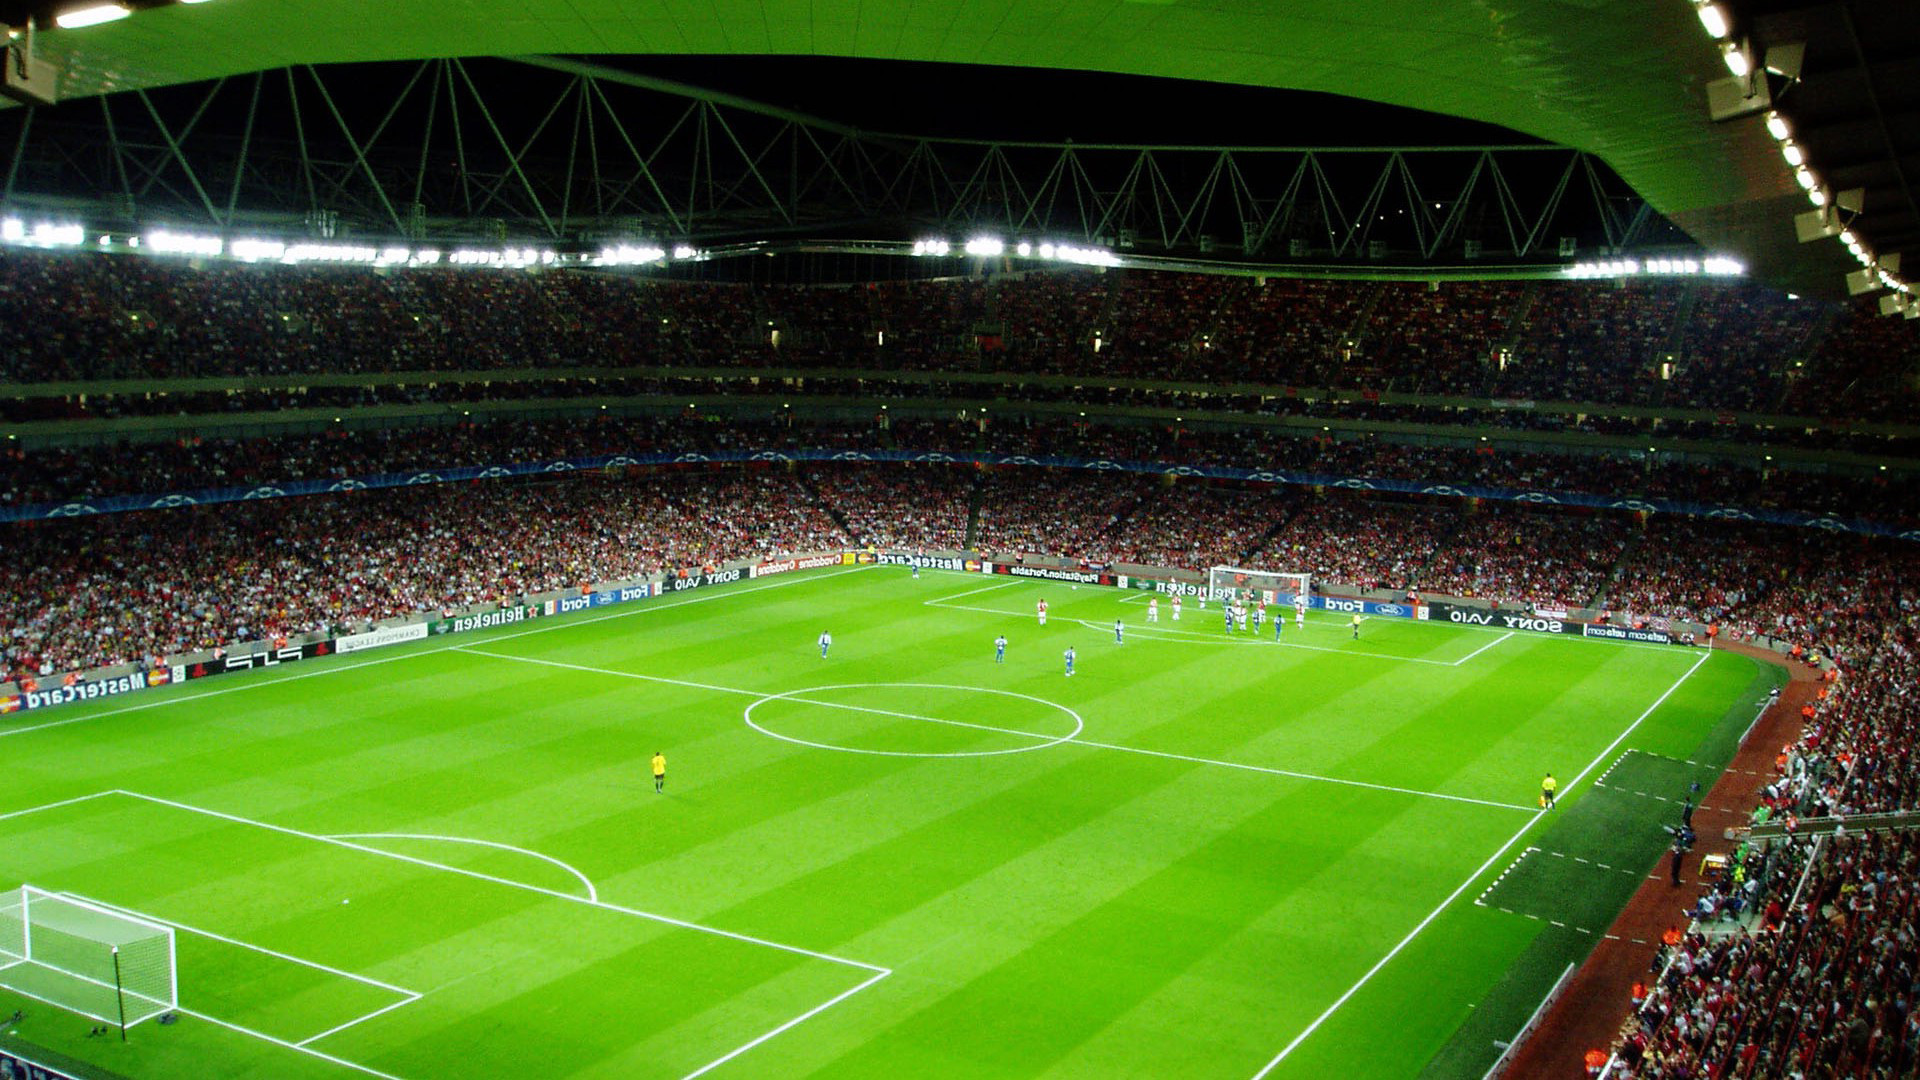 1920x1080 Football Stadium Wallpapers | Free | Download